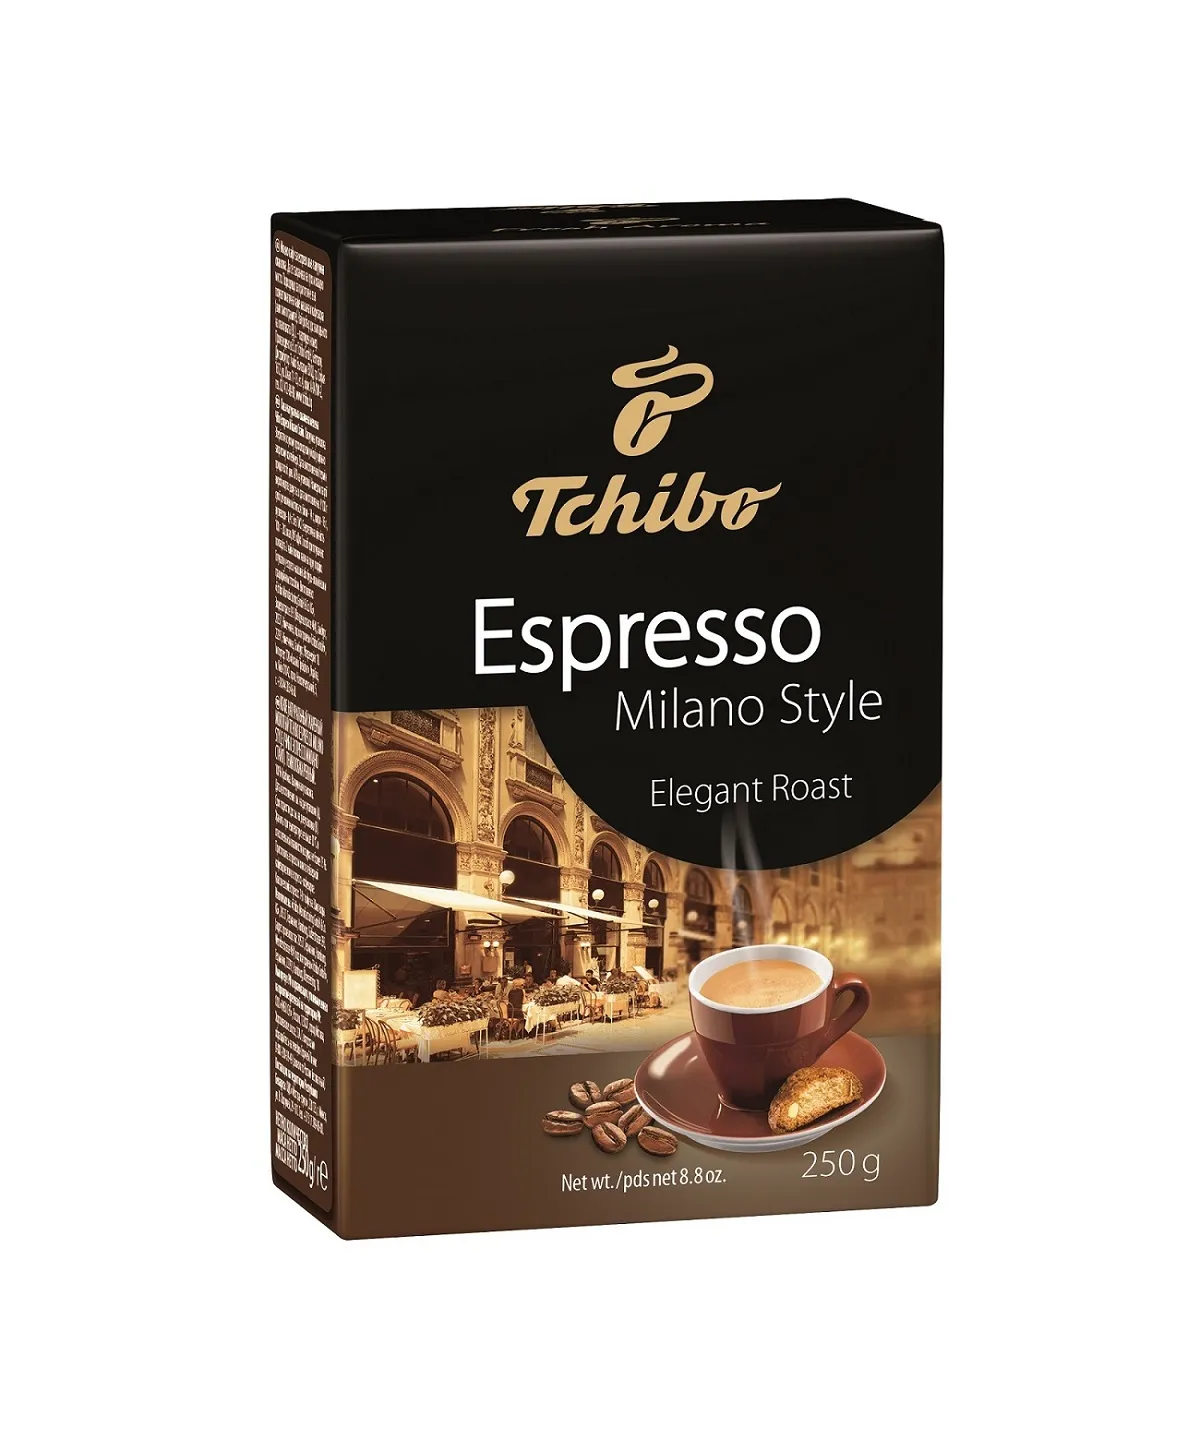 Tchibo Espresso Milano Style Elegant Roast Kawa mielona, 250 g